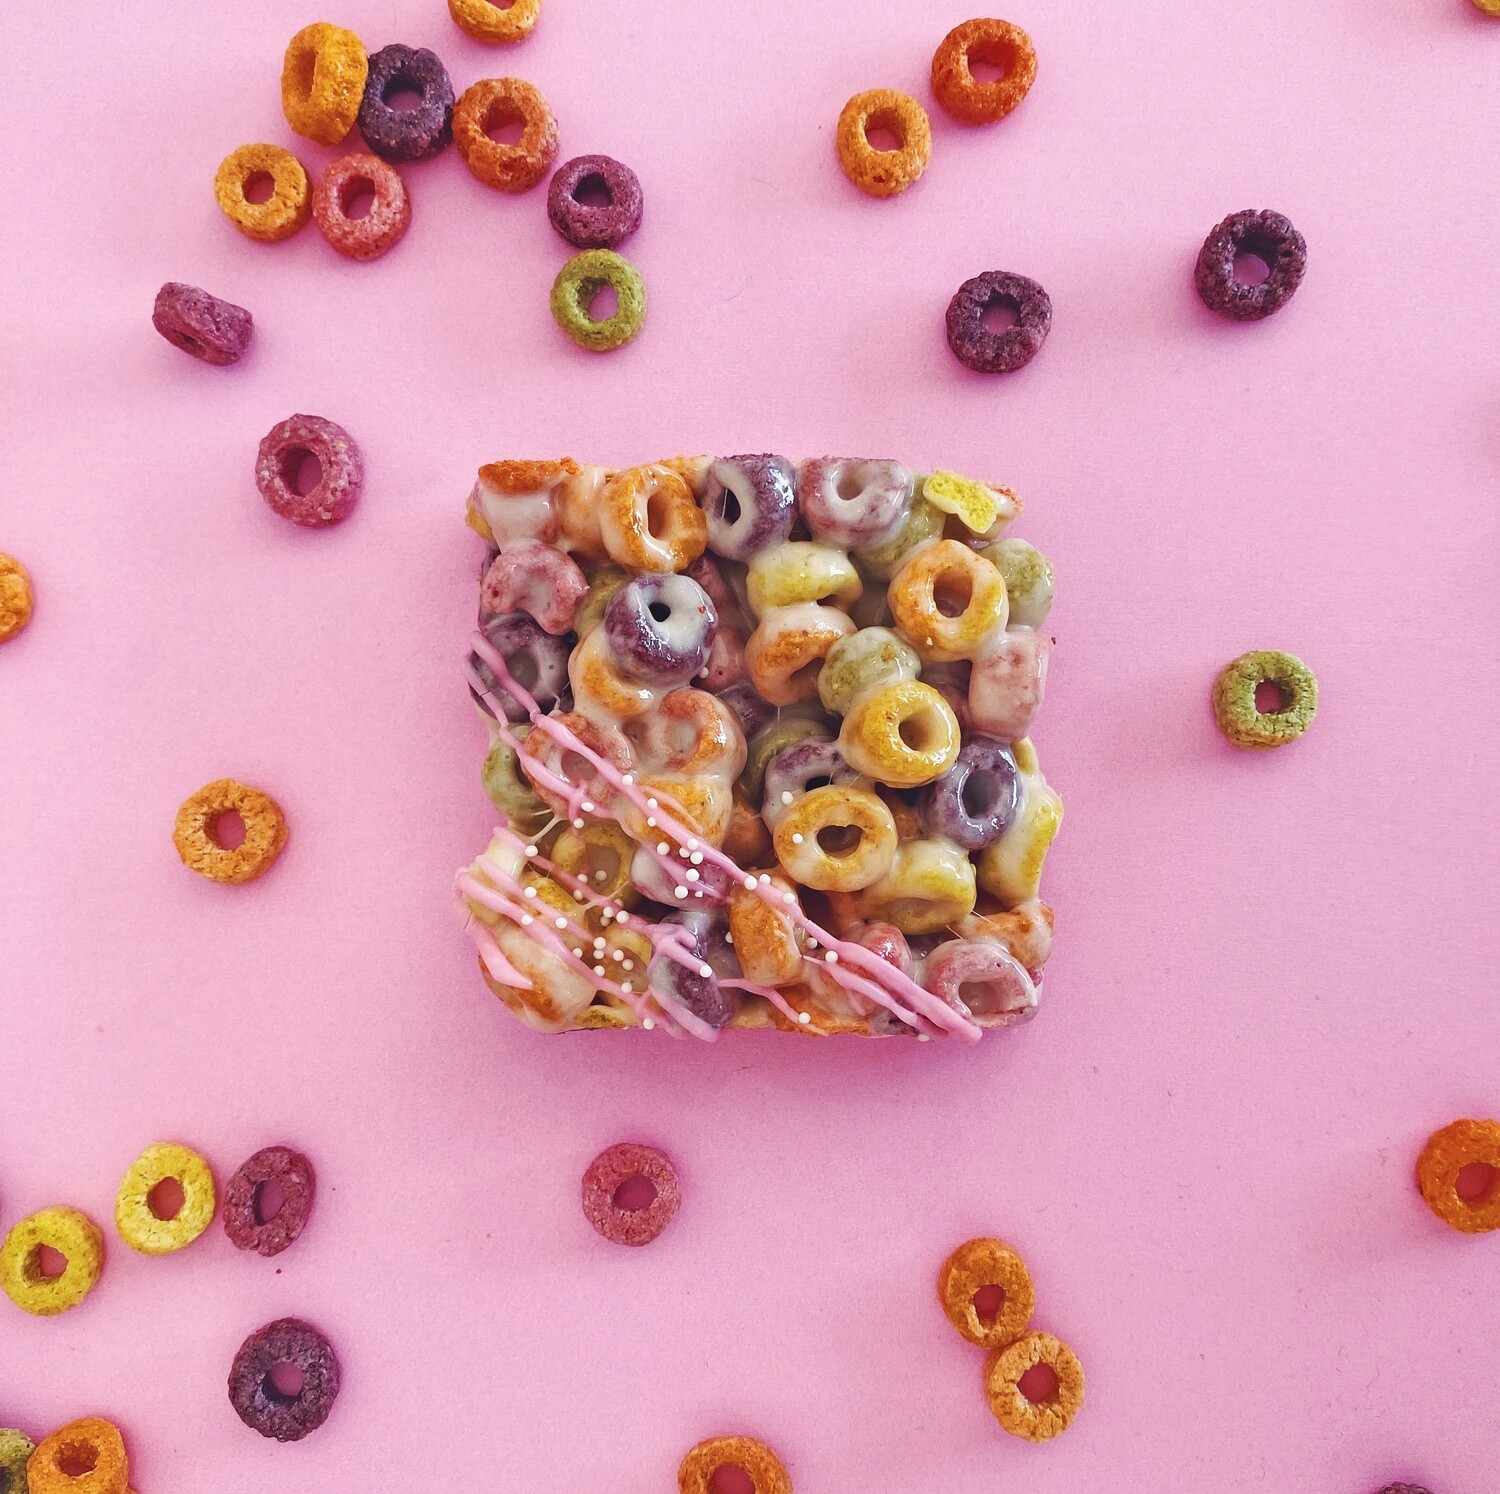 Cereal Bar - Fruit Loops